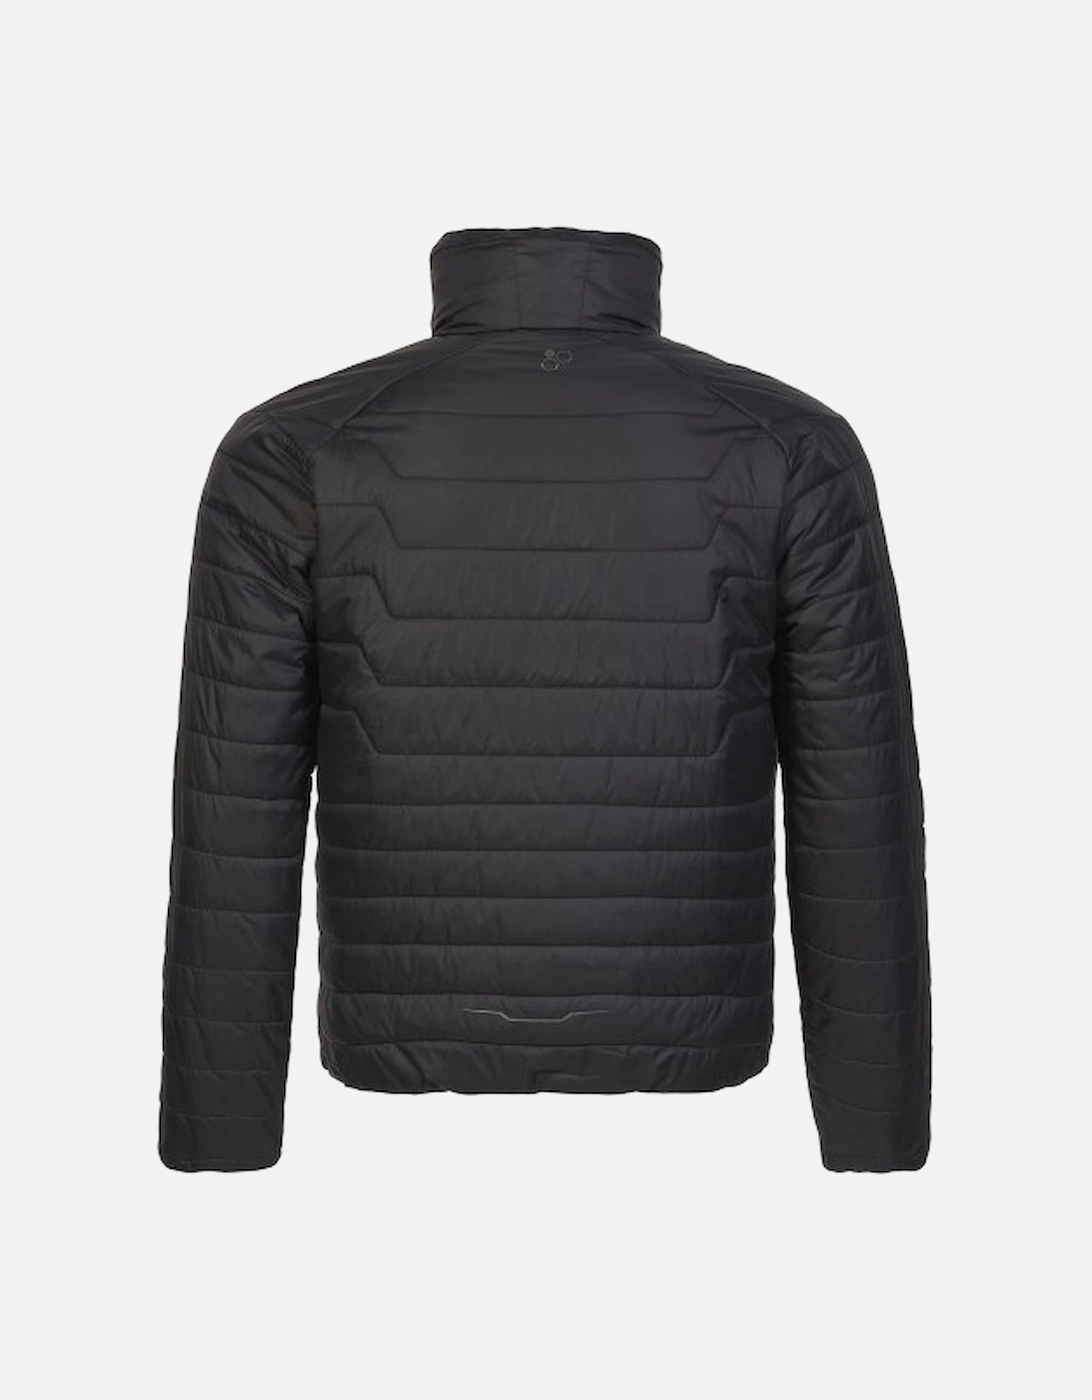 Men's PTEX Polartec Jacket Black